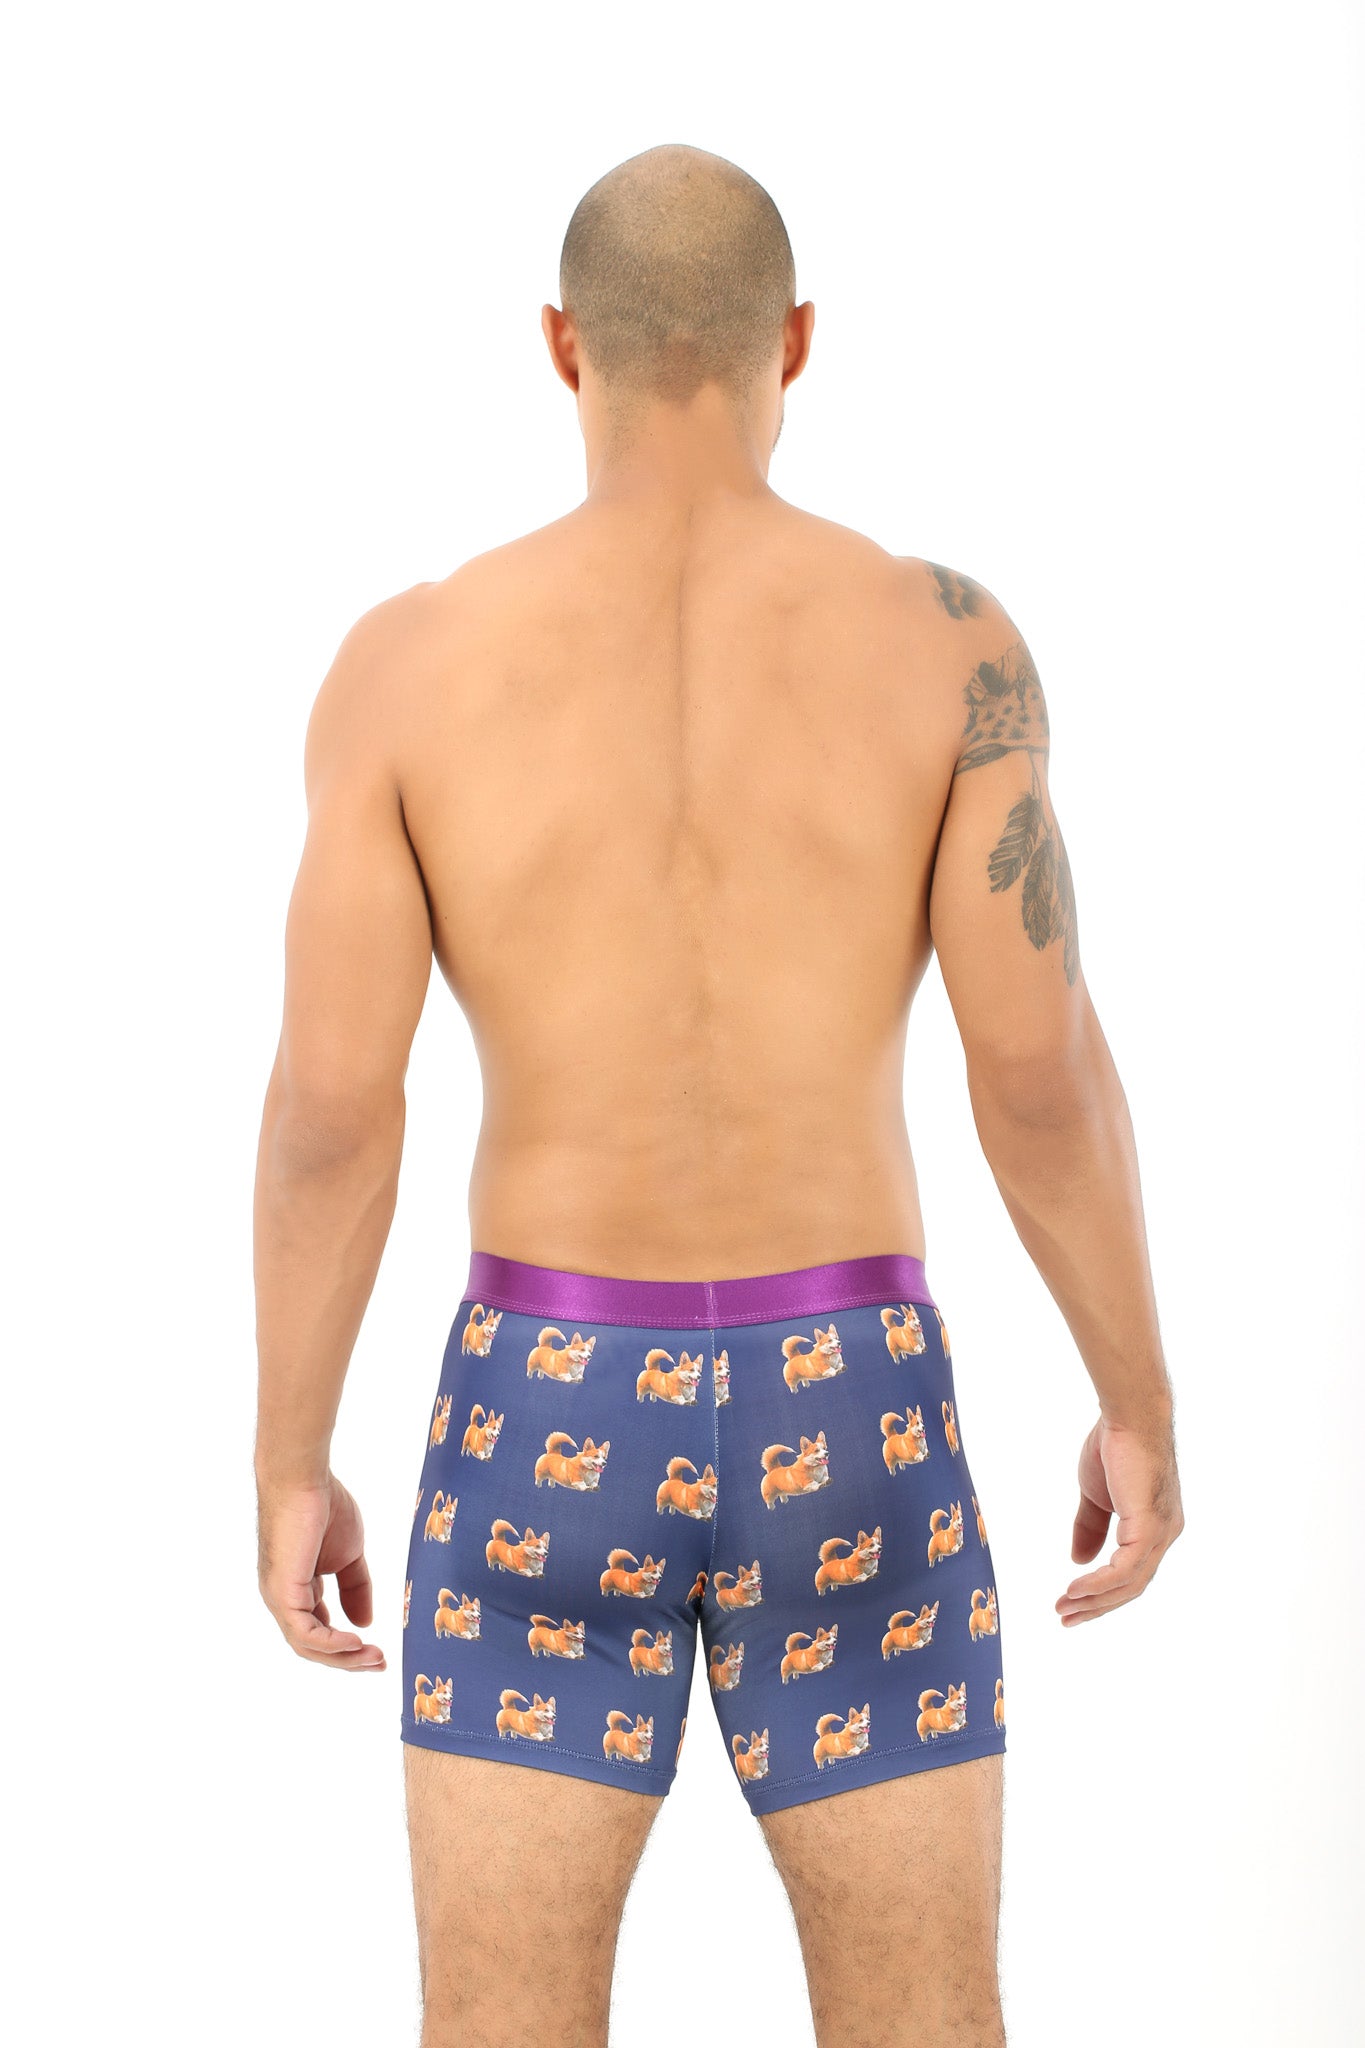 The back of a man wearing Corgi Dog Underwear.